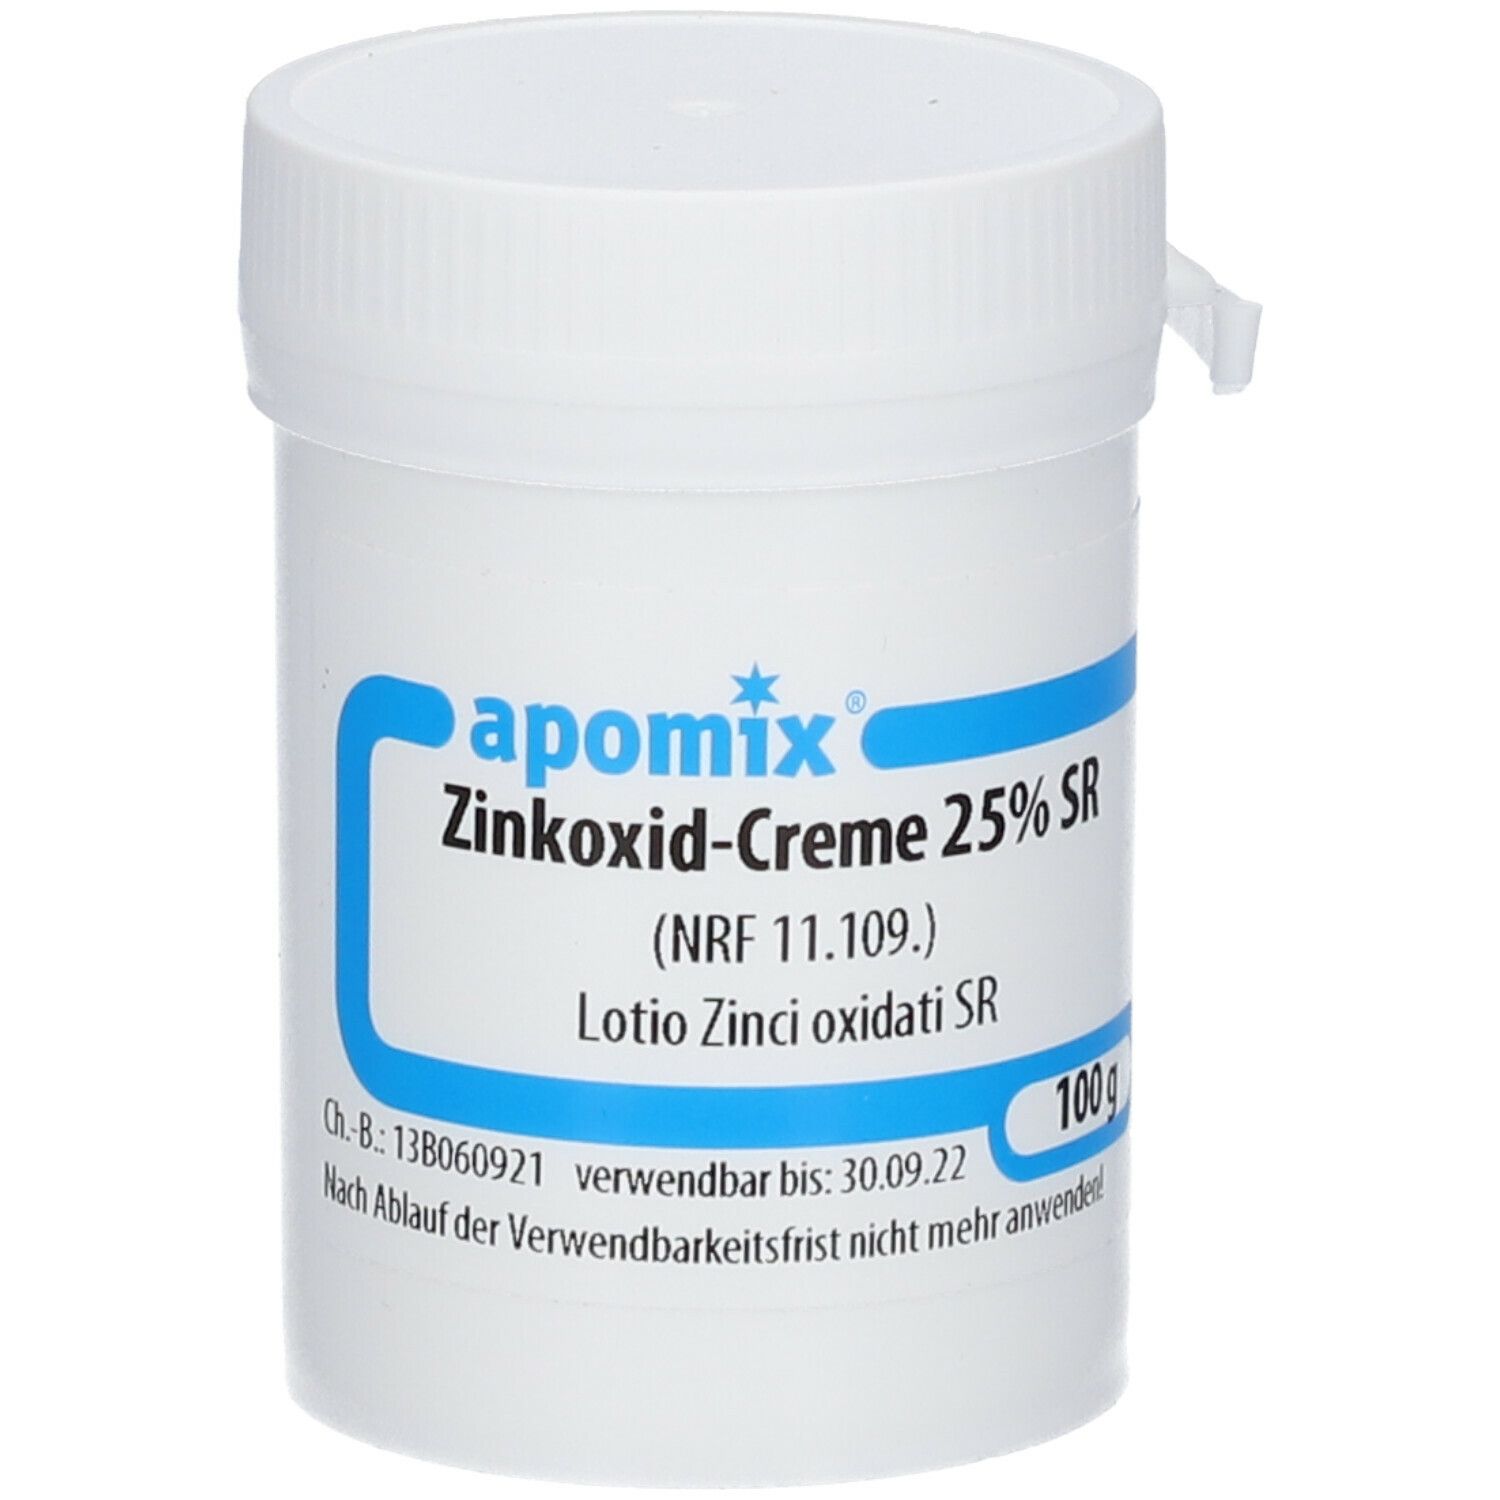 apomix® Zinkoxid-Creme 25% SR